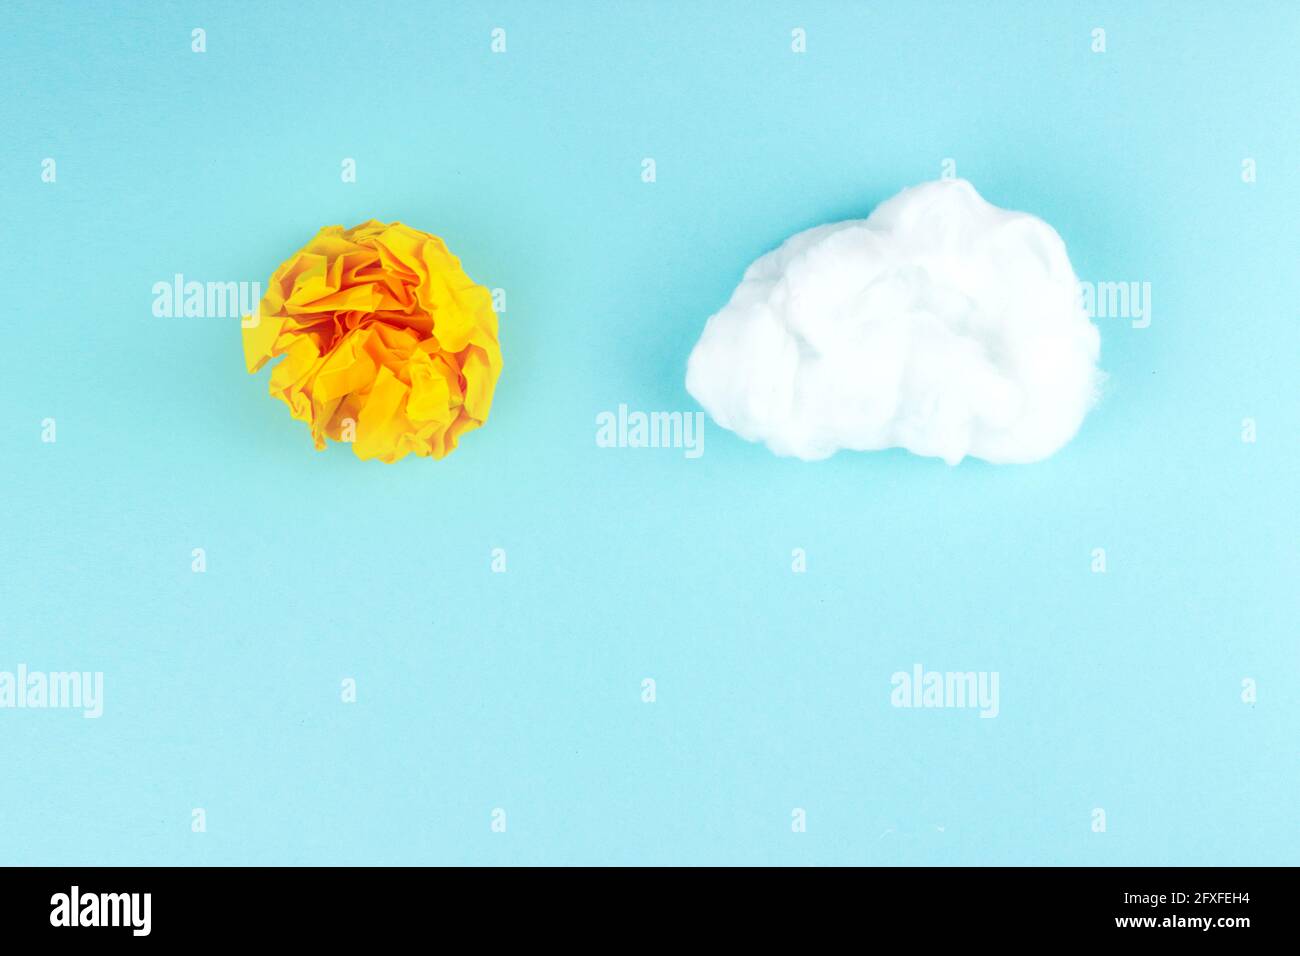 Yellow crumpled paper ball. Business creativity, idea concept. Shining sun concept. Stock Photo